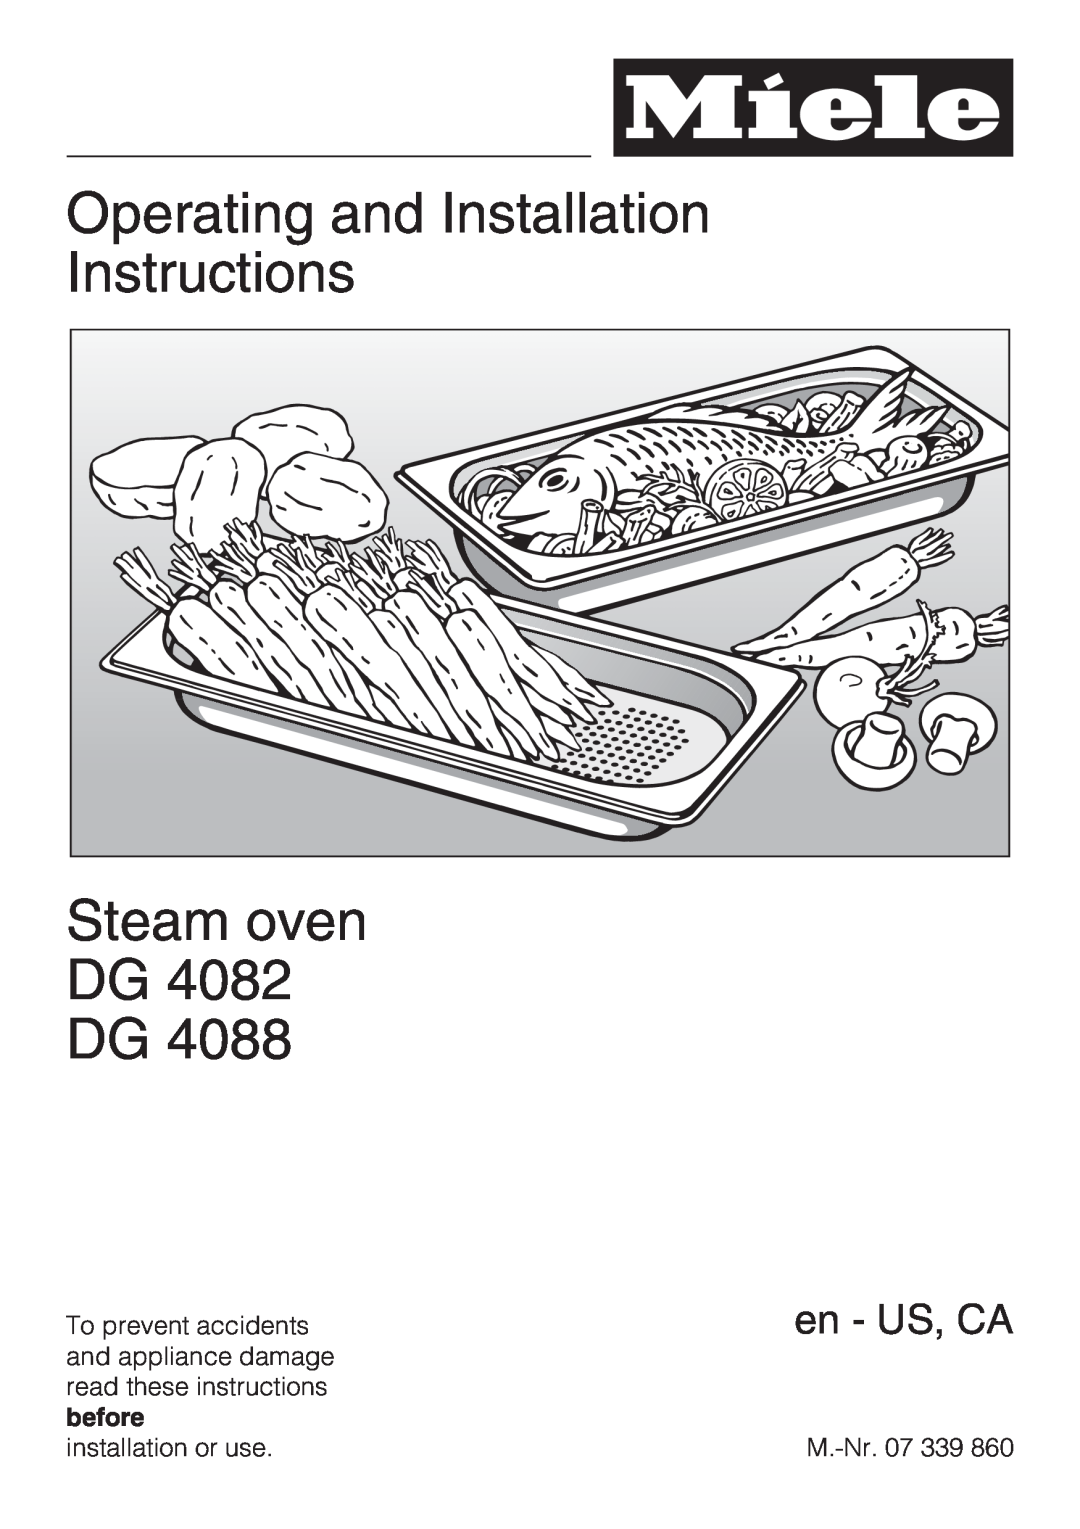 Miele DG 4088, DG4082 installation instructions Operating and Installation Instructions, Steam oven DG DG, en - US, CA 